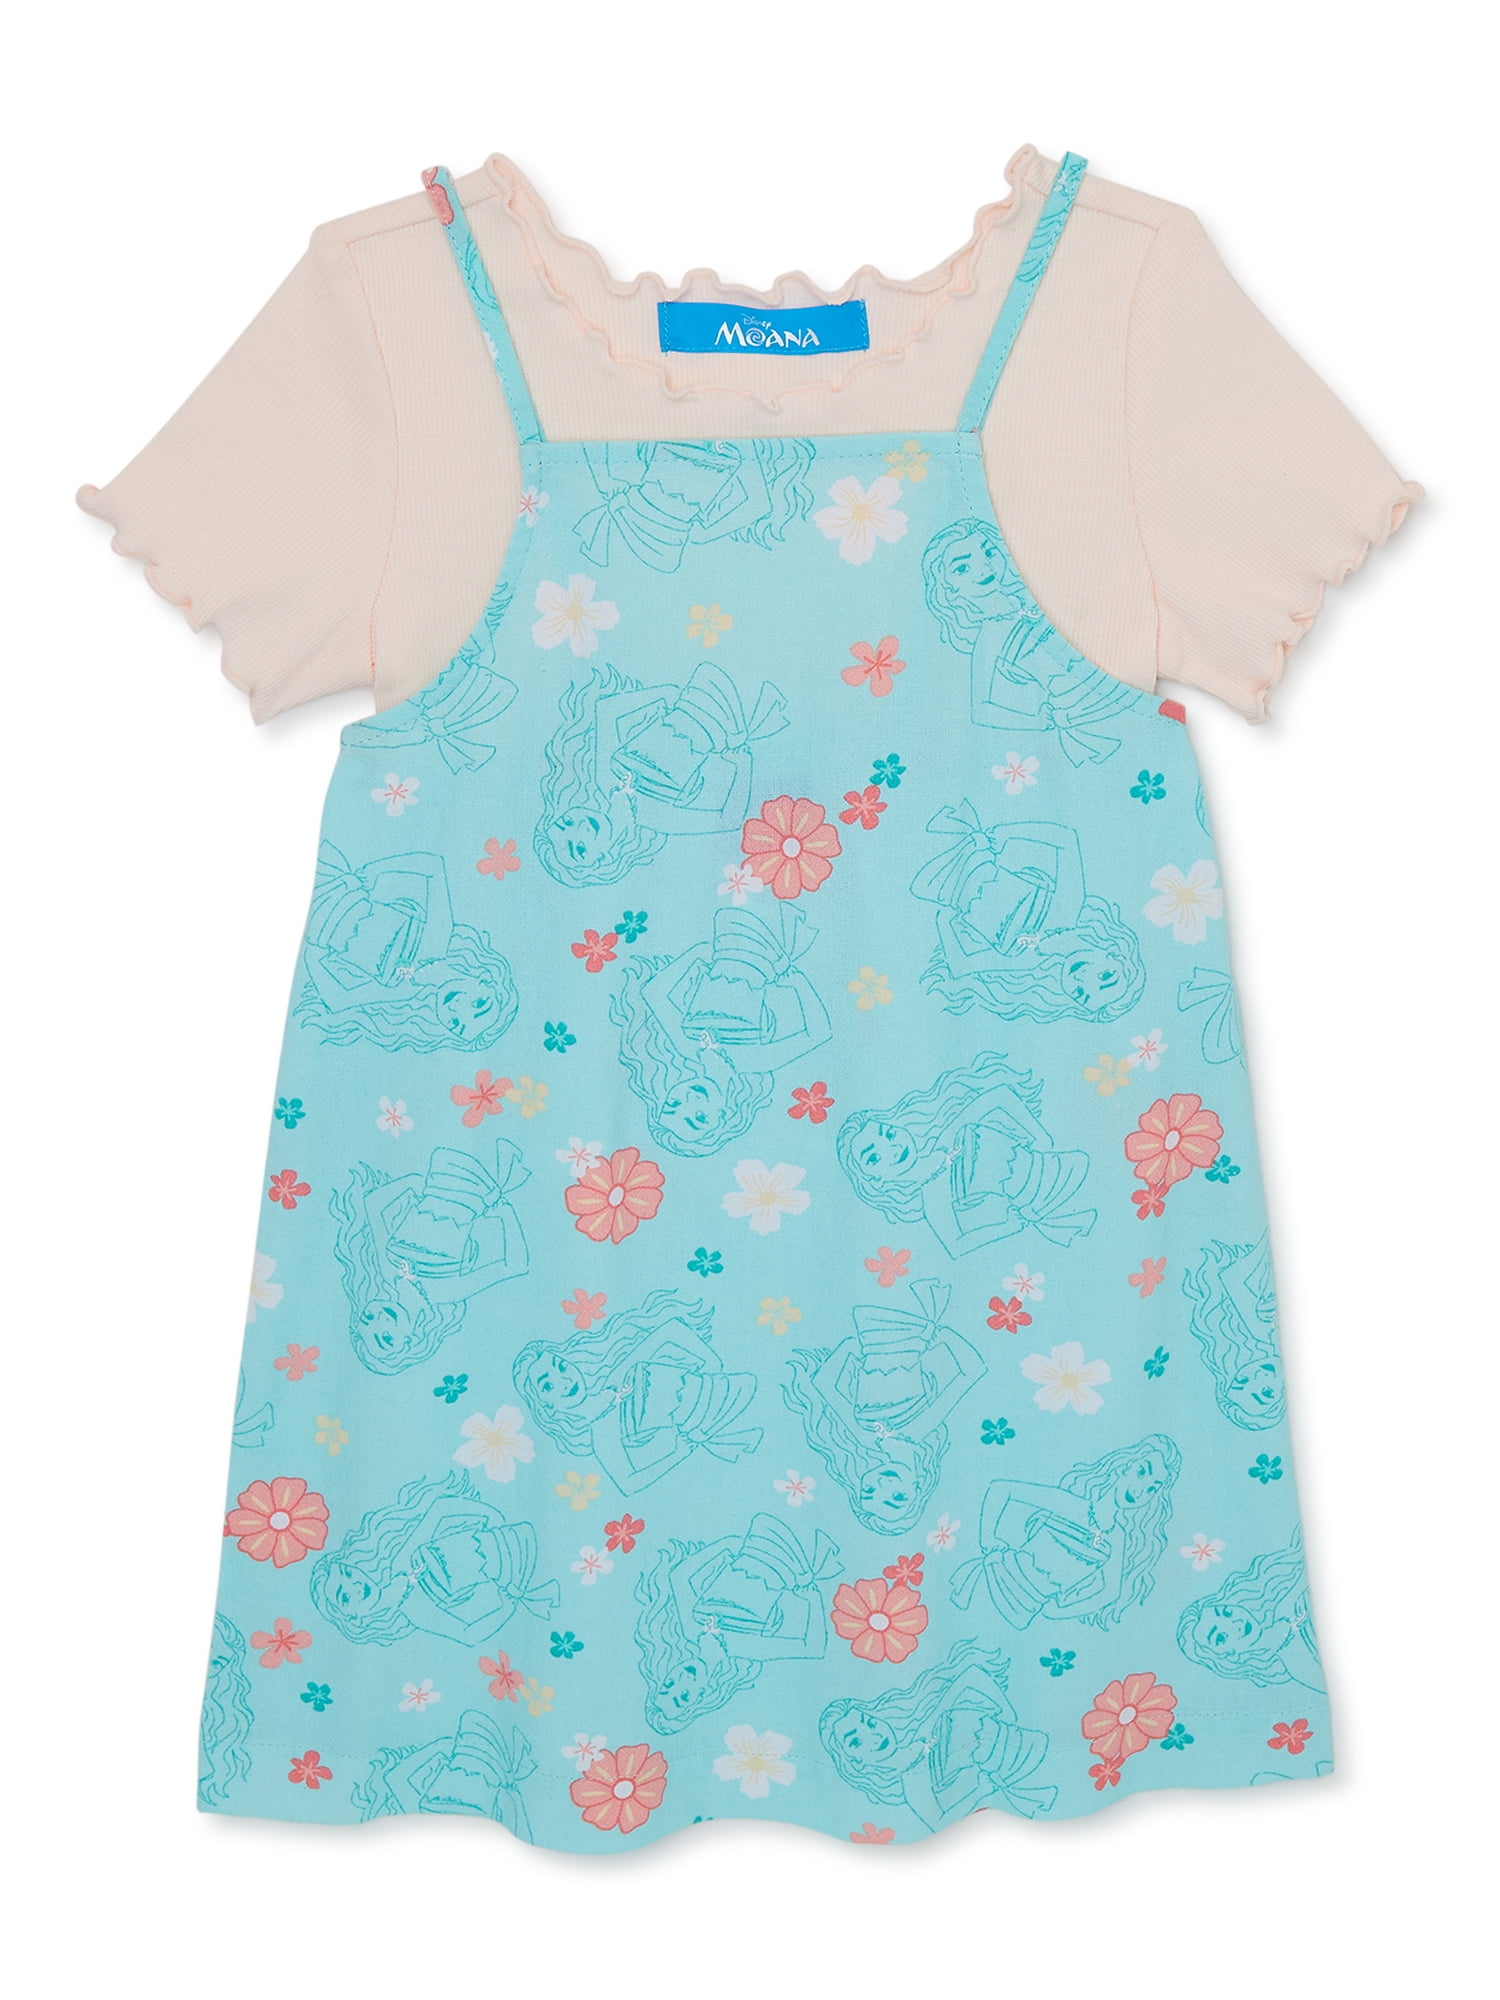 Disney Toddler Girl Moana Ruffled Top and Sleeveless Dress Set, 2-Piece, Sizes 18M-5T